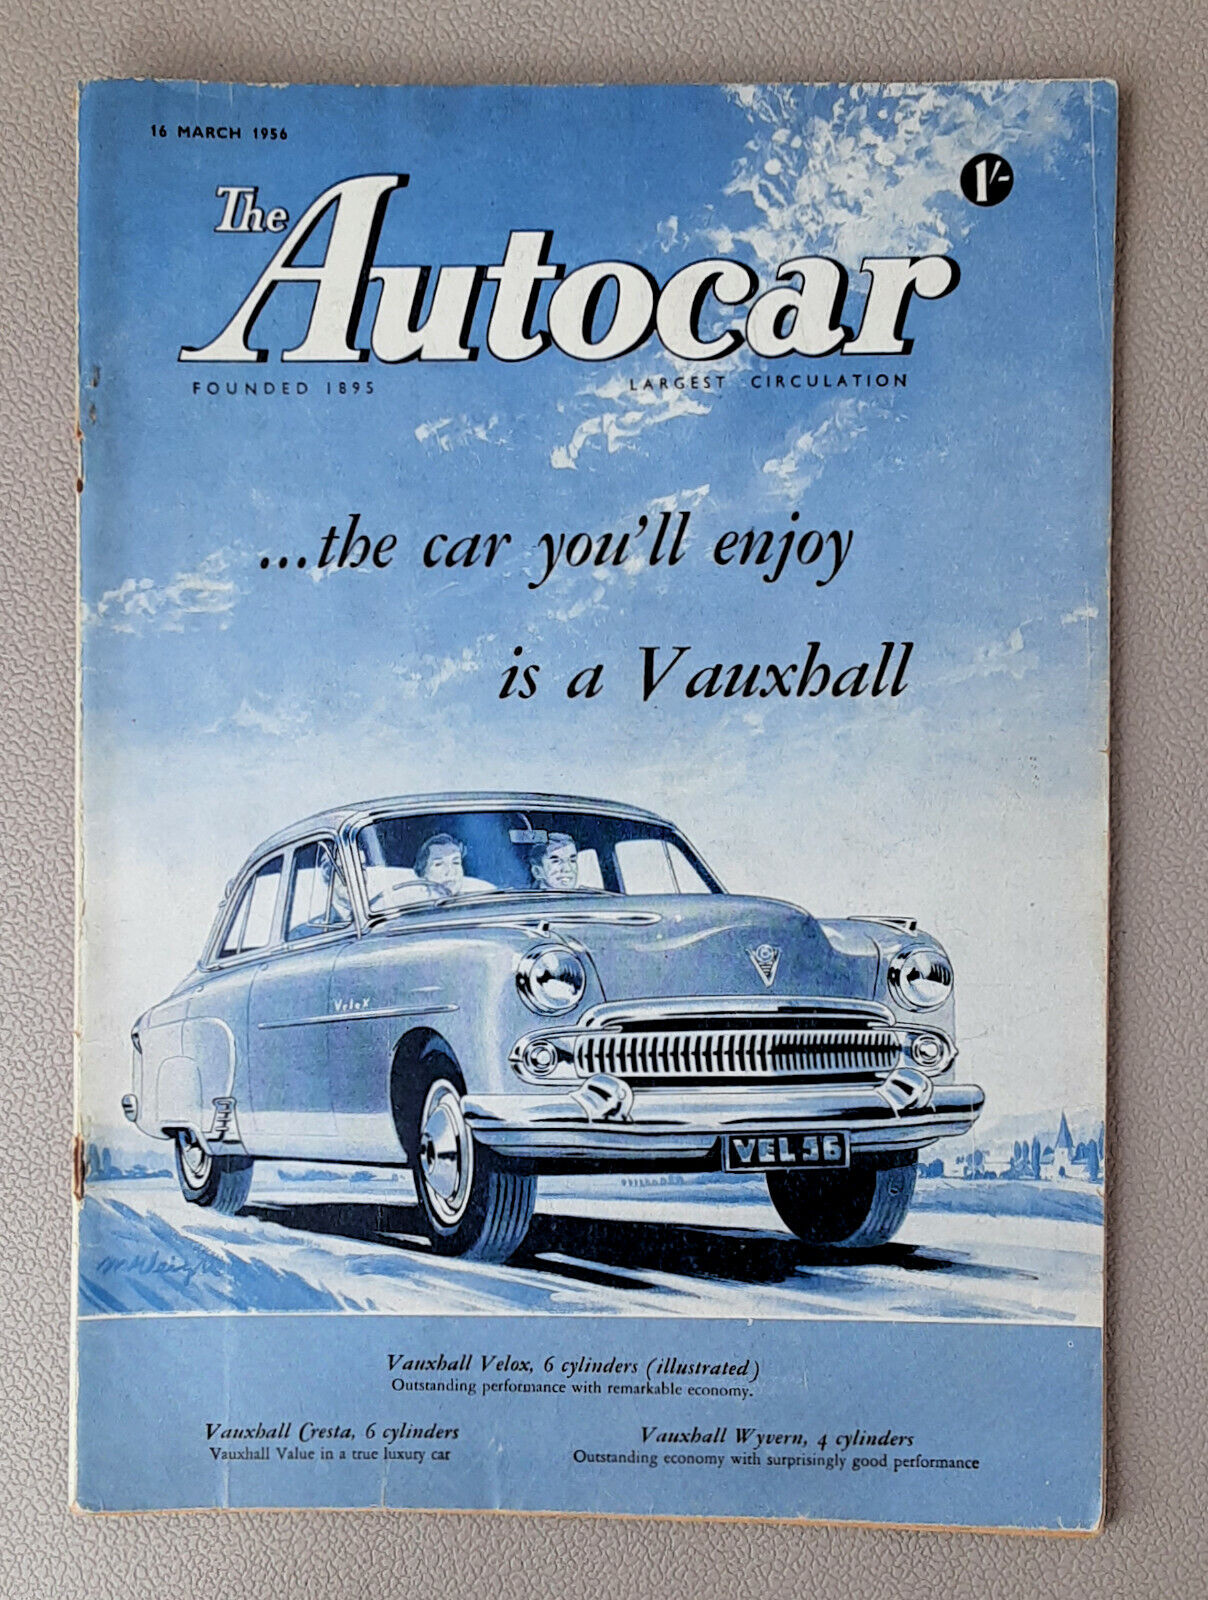 The Autocar March 16 1956 Original British Car Magazine UK Vintage Car Issue 